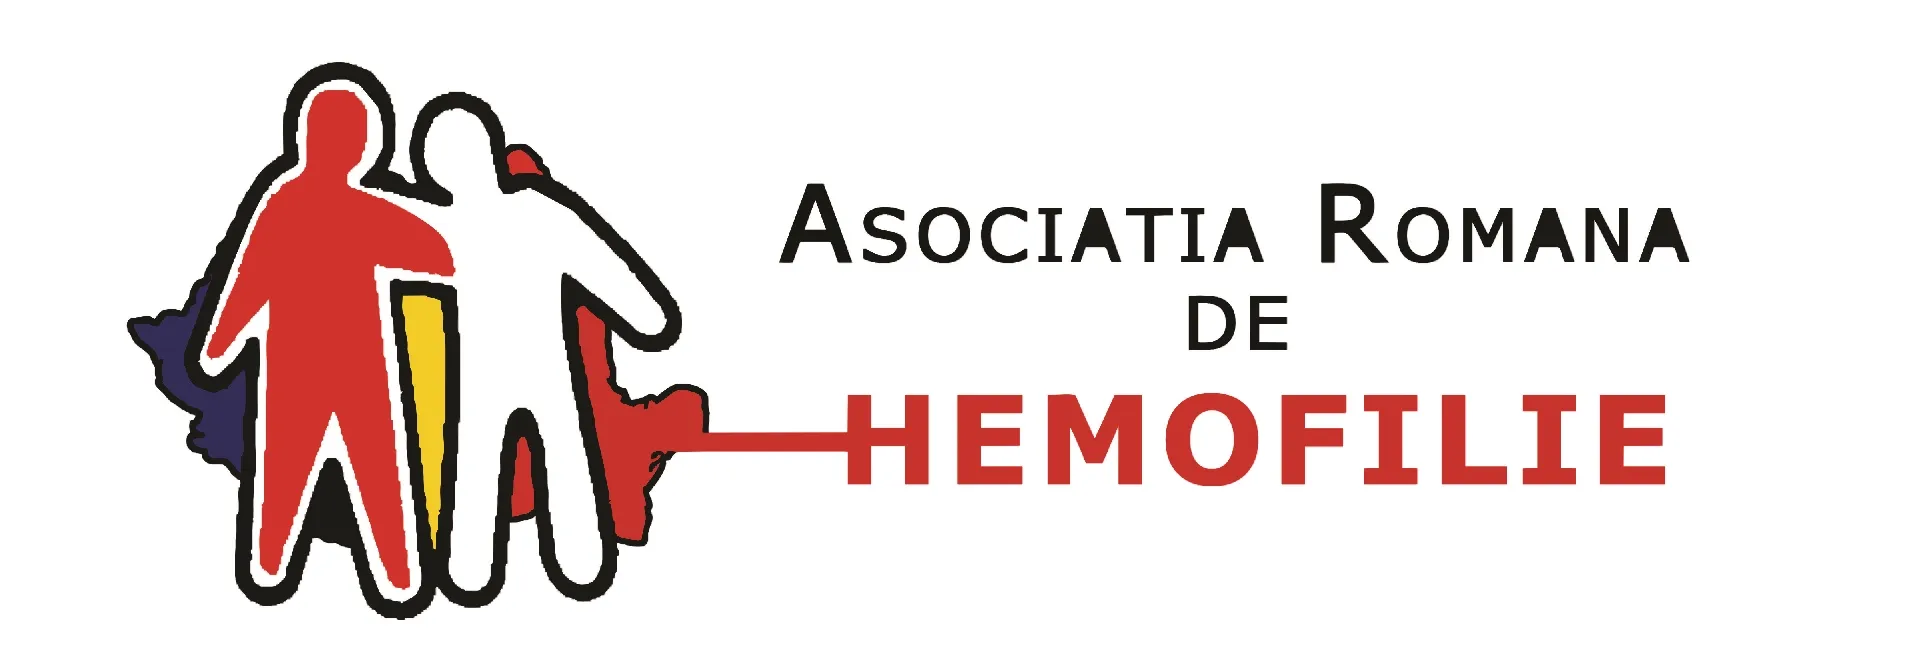 Asociatia Romana de Hemofilie